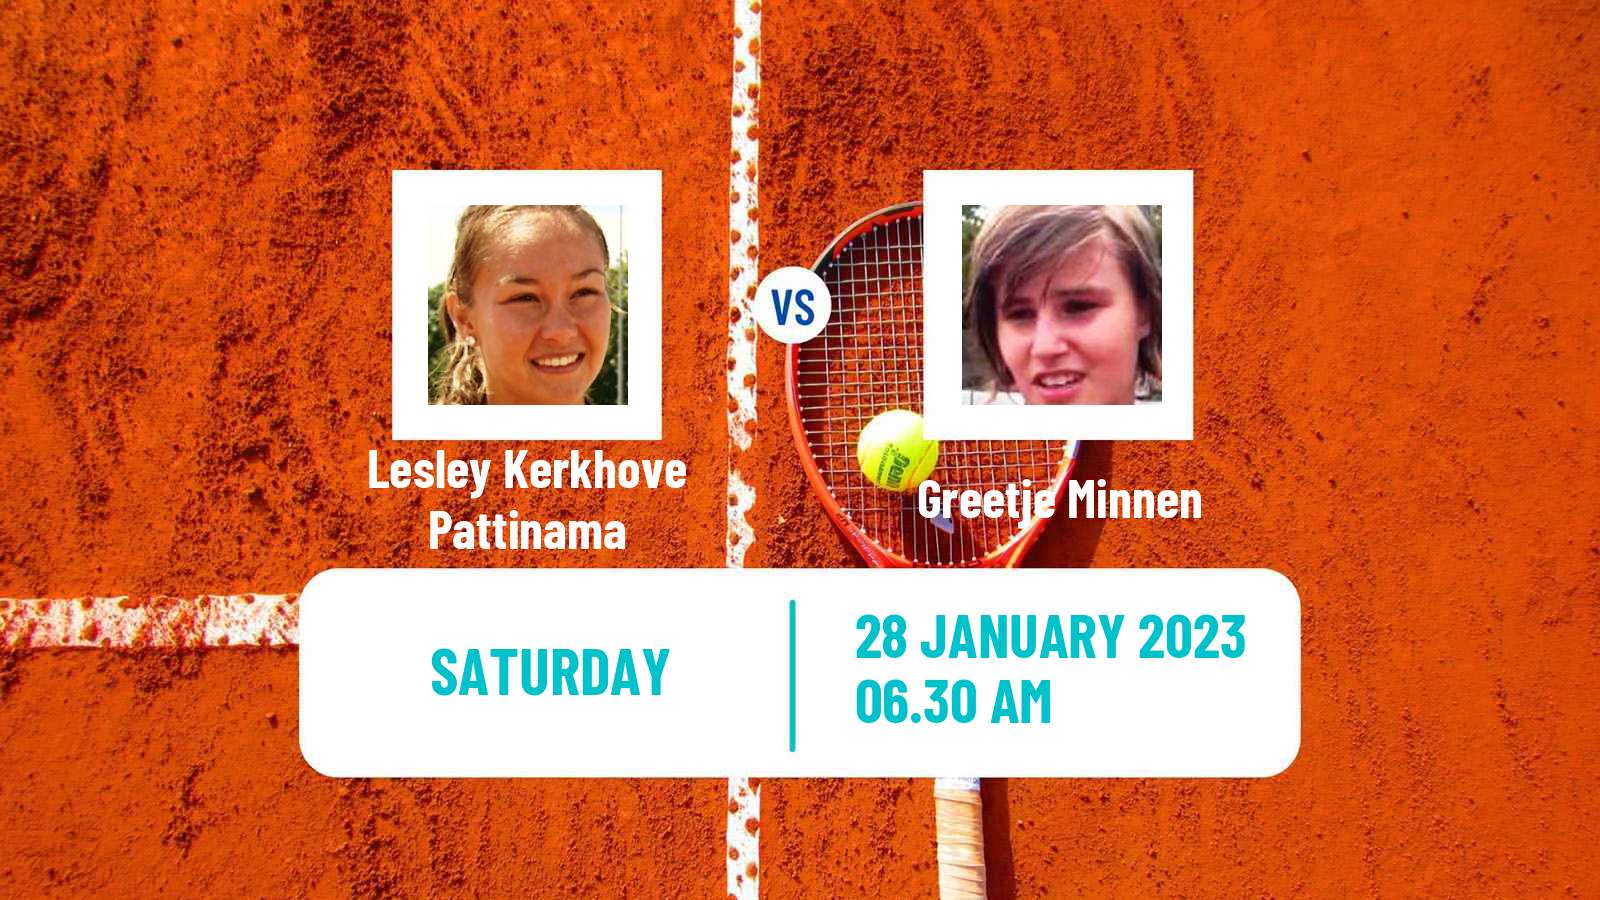 Tennis ITF Tournaments Lesley Kerkhove Pattinama - Greetje Minnen